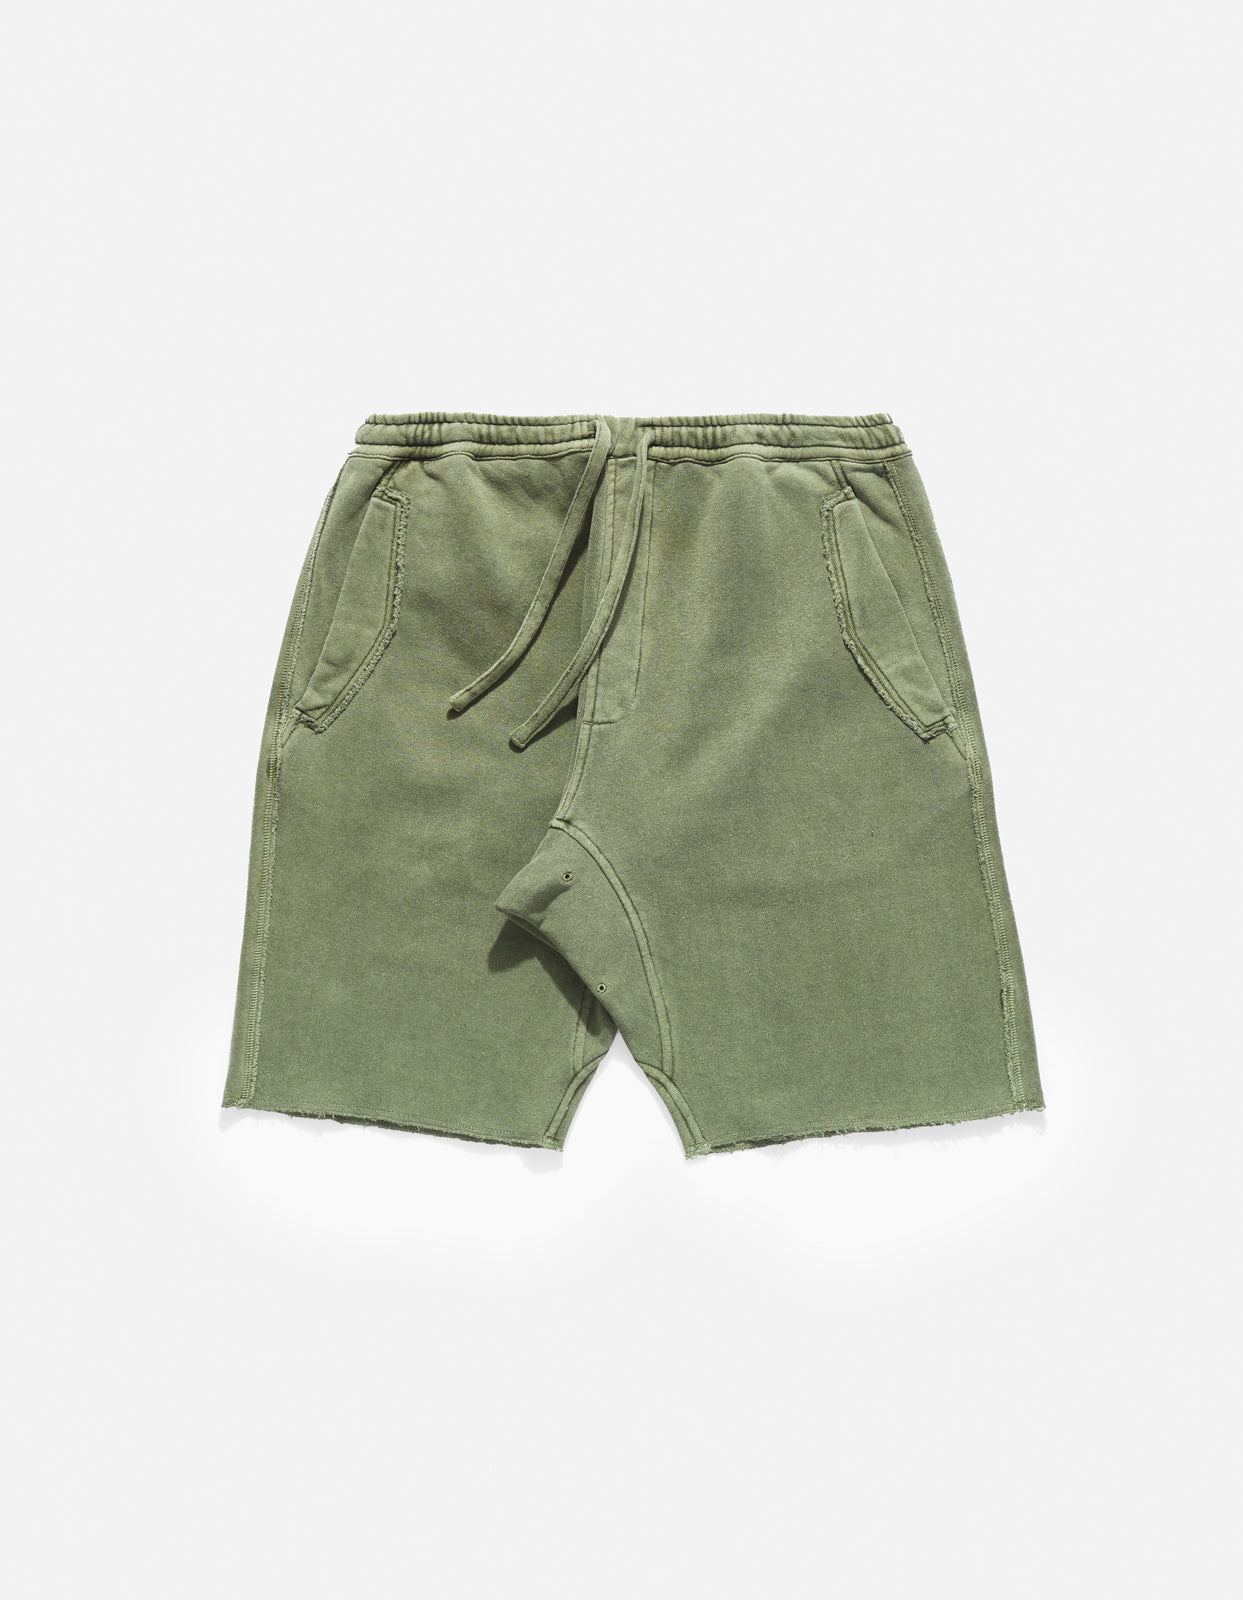 8028 Hemp Organic Sweat Shorts Olive OG-107F